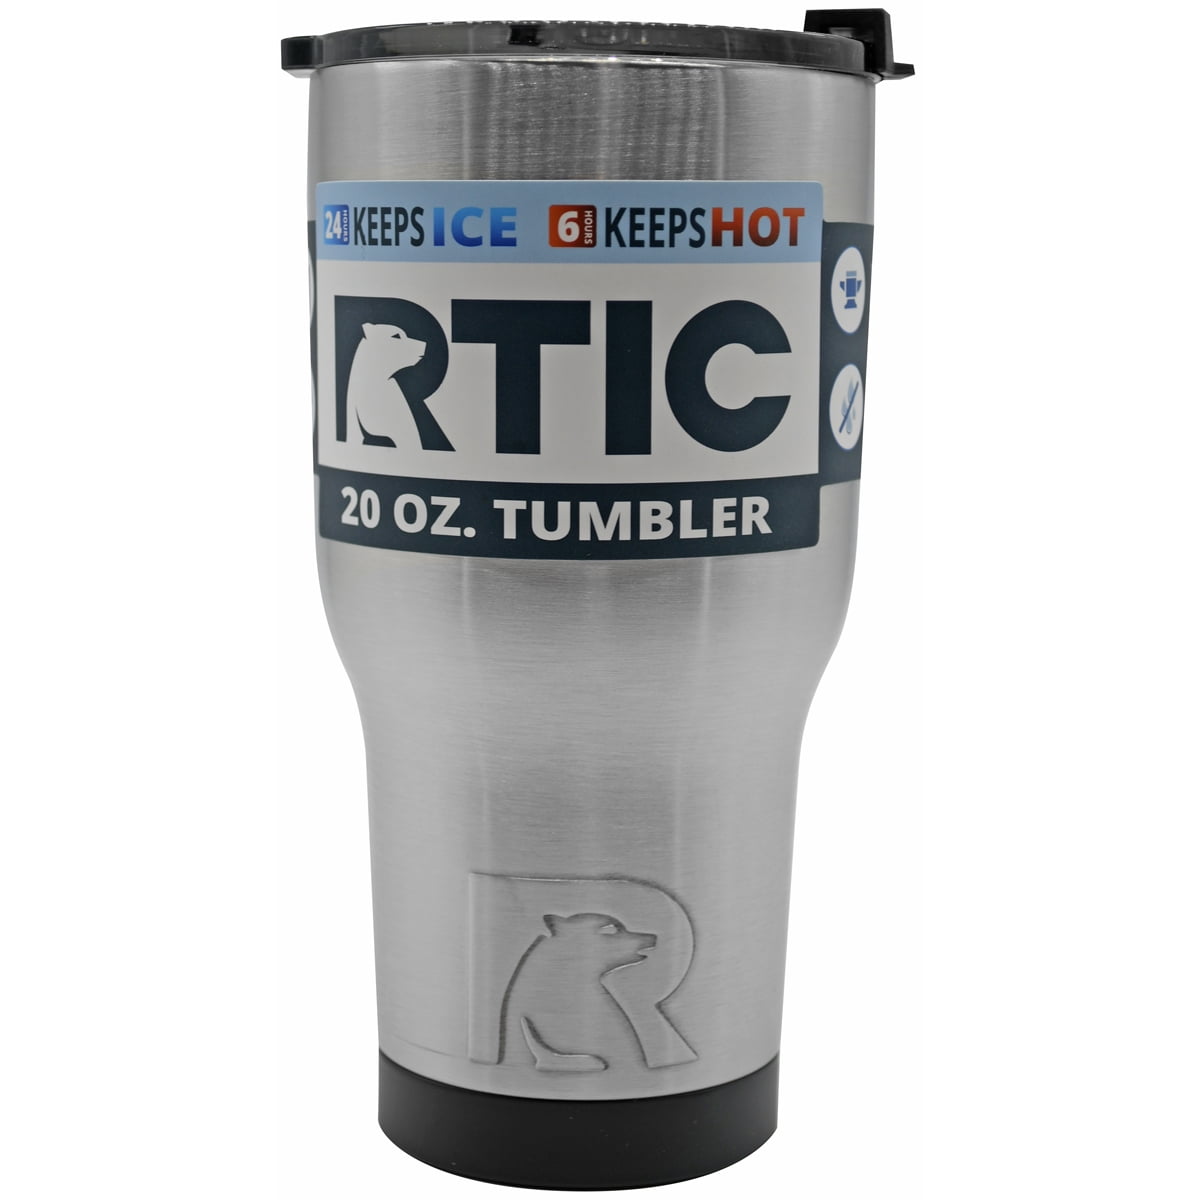 RTIC, RTIC tumbler, 20 oz., 20oz, tumbler, insulated tumbler